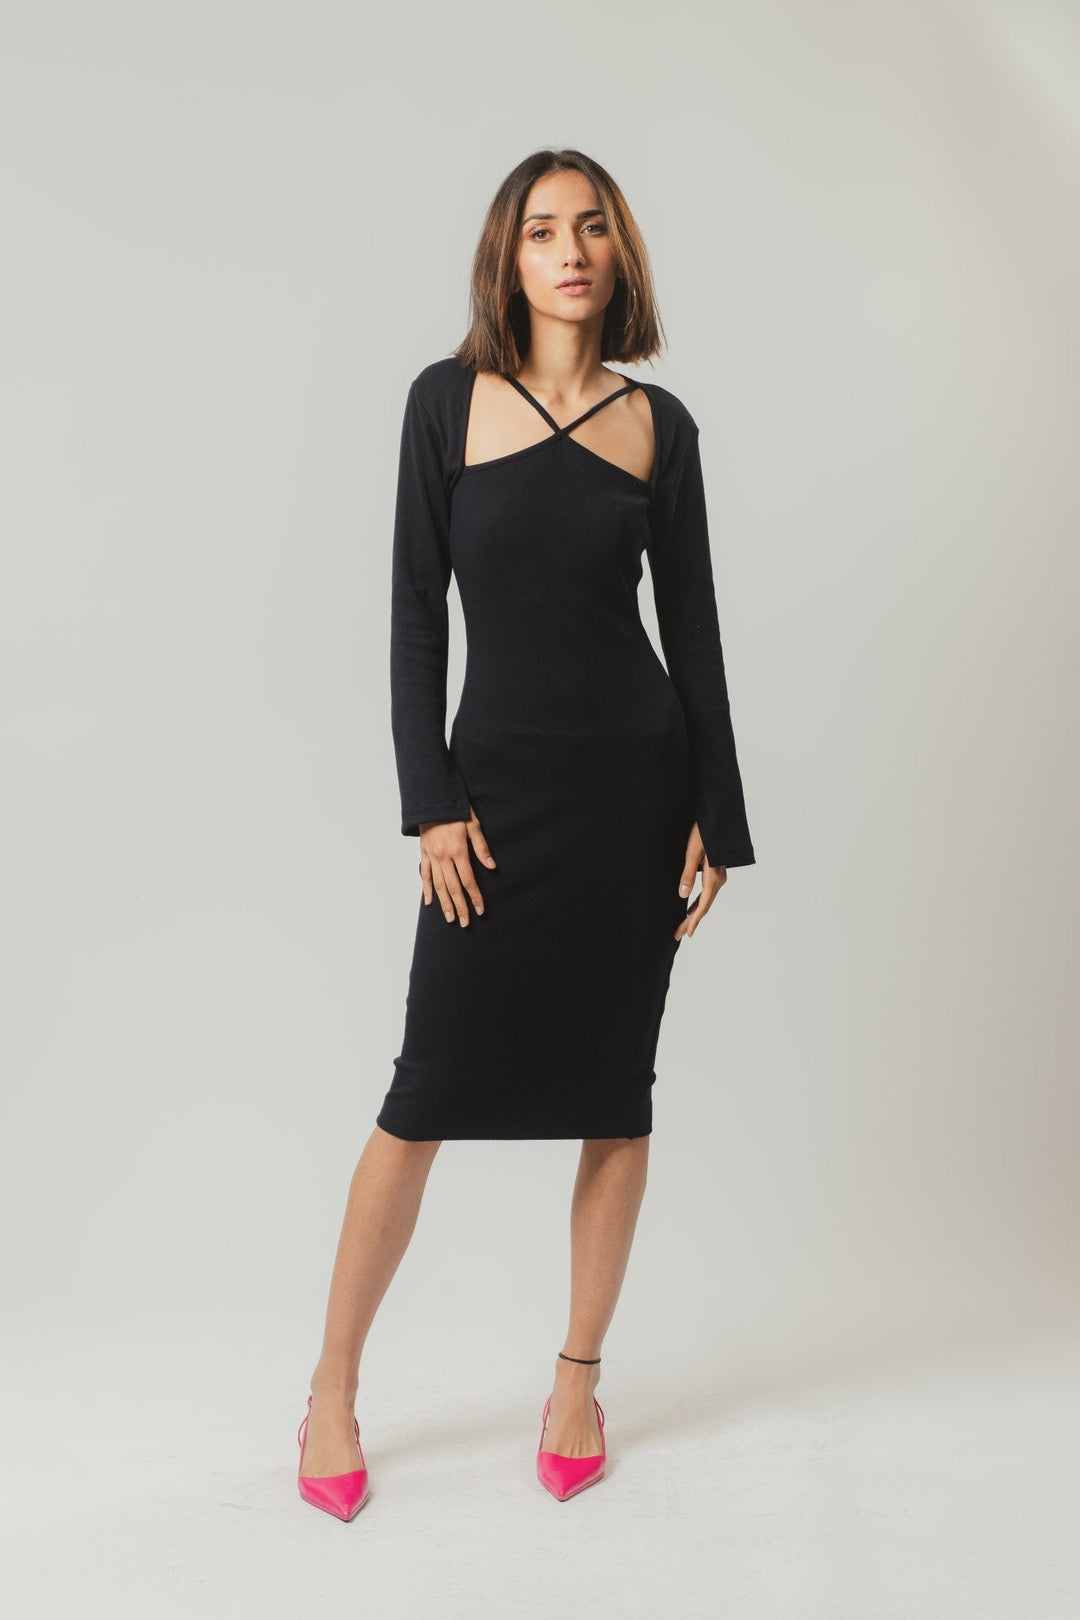 Shop Bodycon Dresses for Women Online